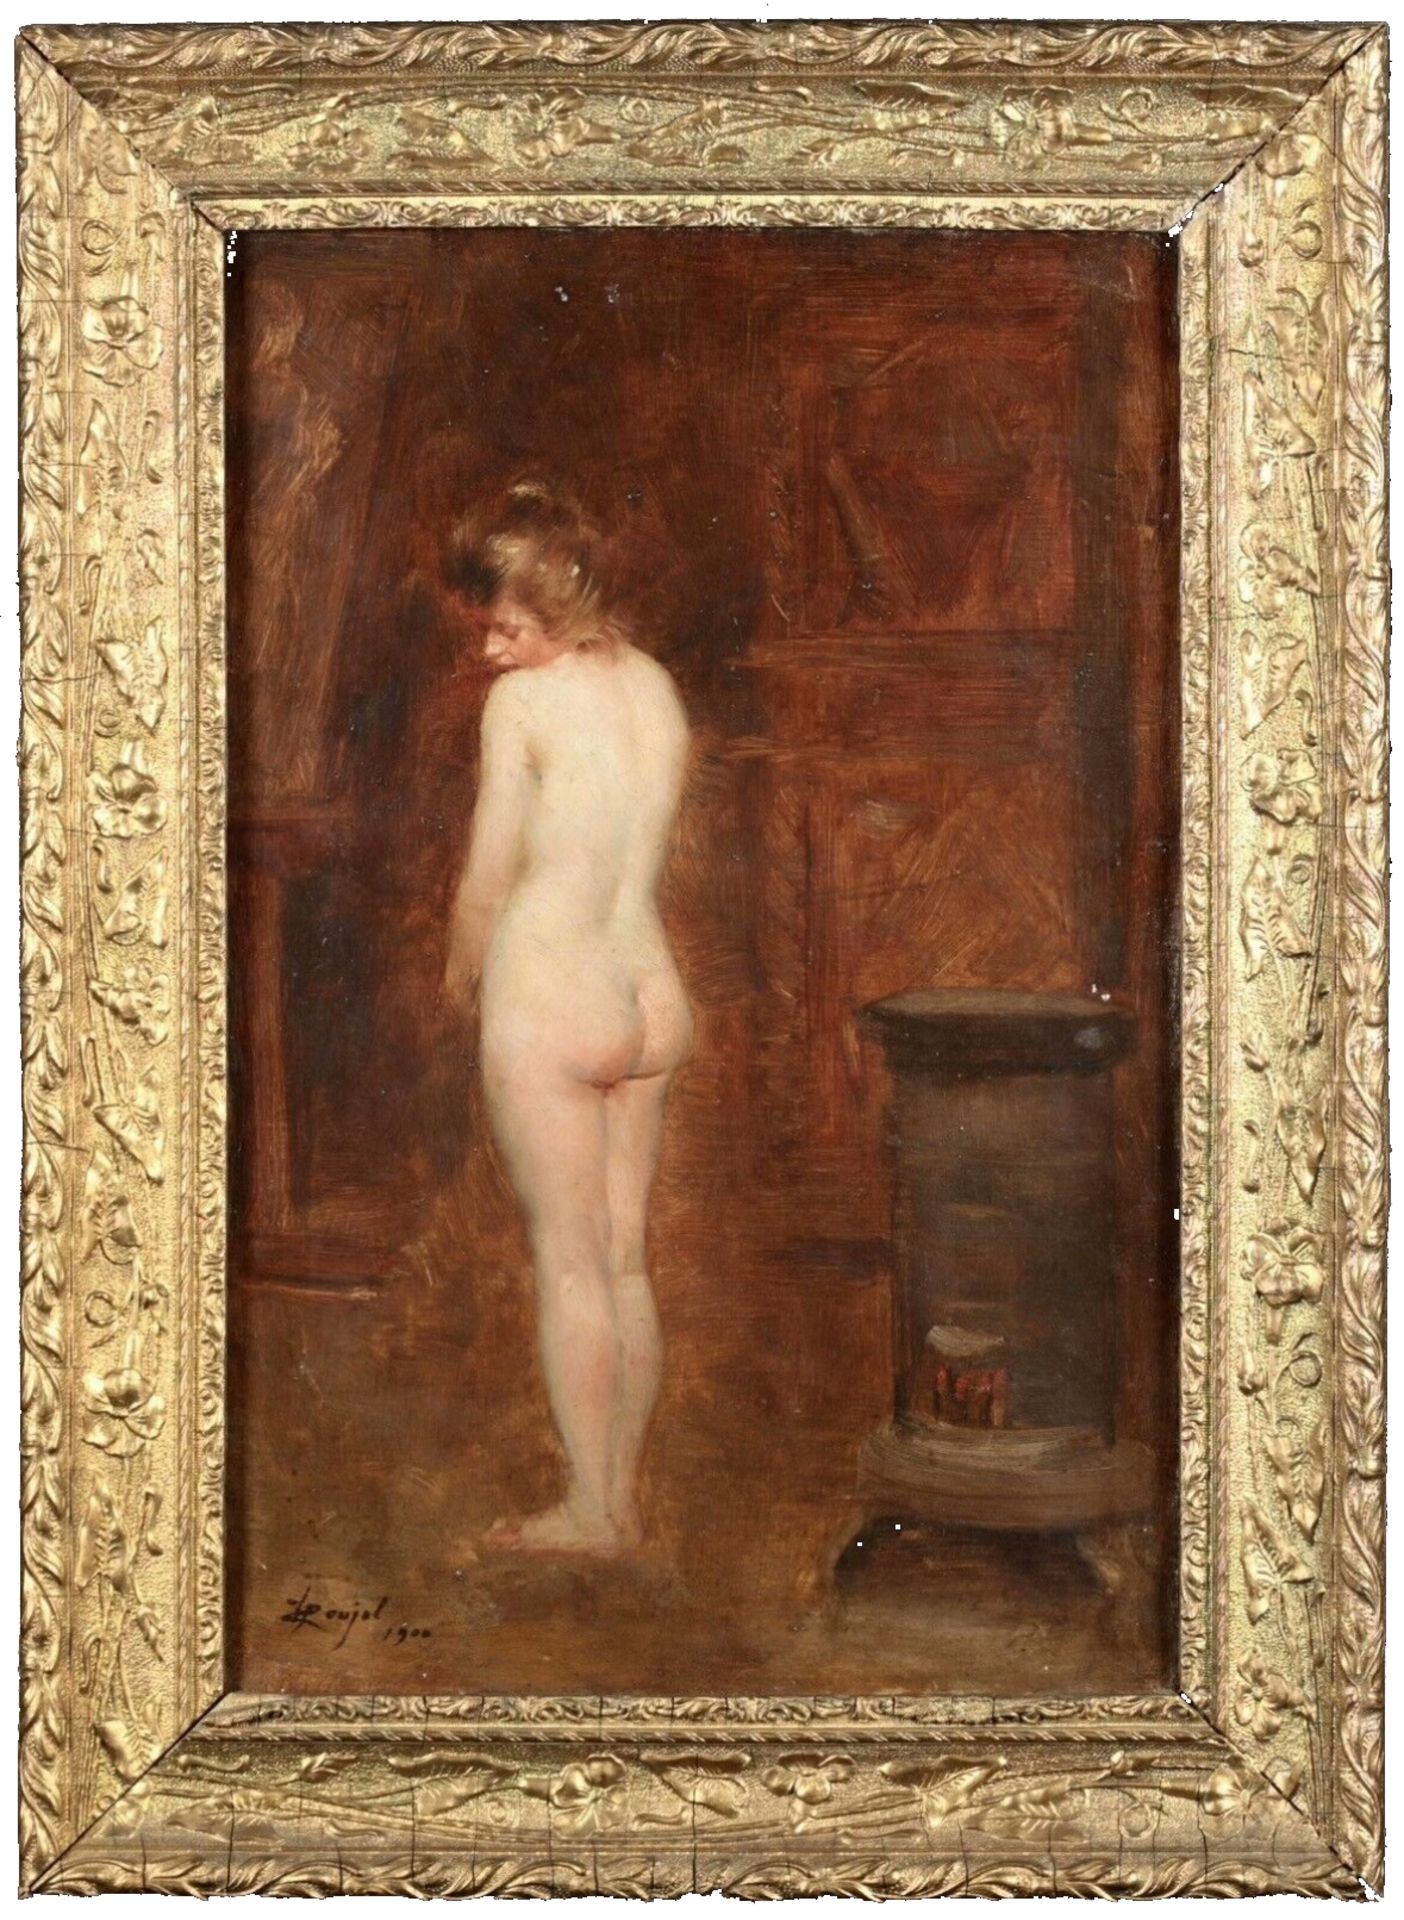 Casimir Paul Pujol (1848 - 1902), Oil Painting on Canvas